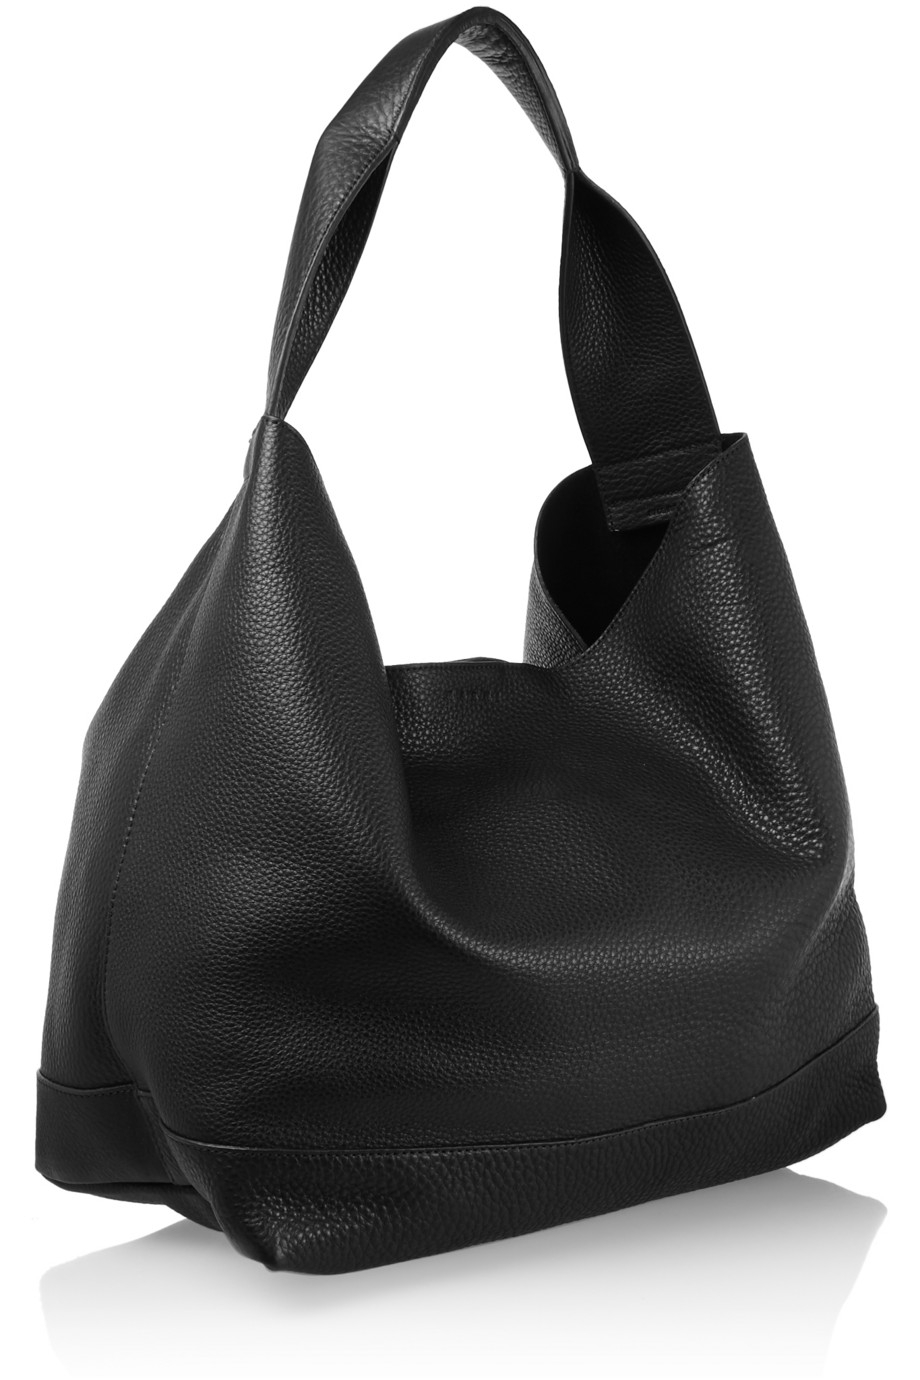 Marni Hobo Medium Textured-Leather Shoulder Bag in Black - Lyst